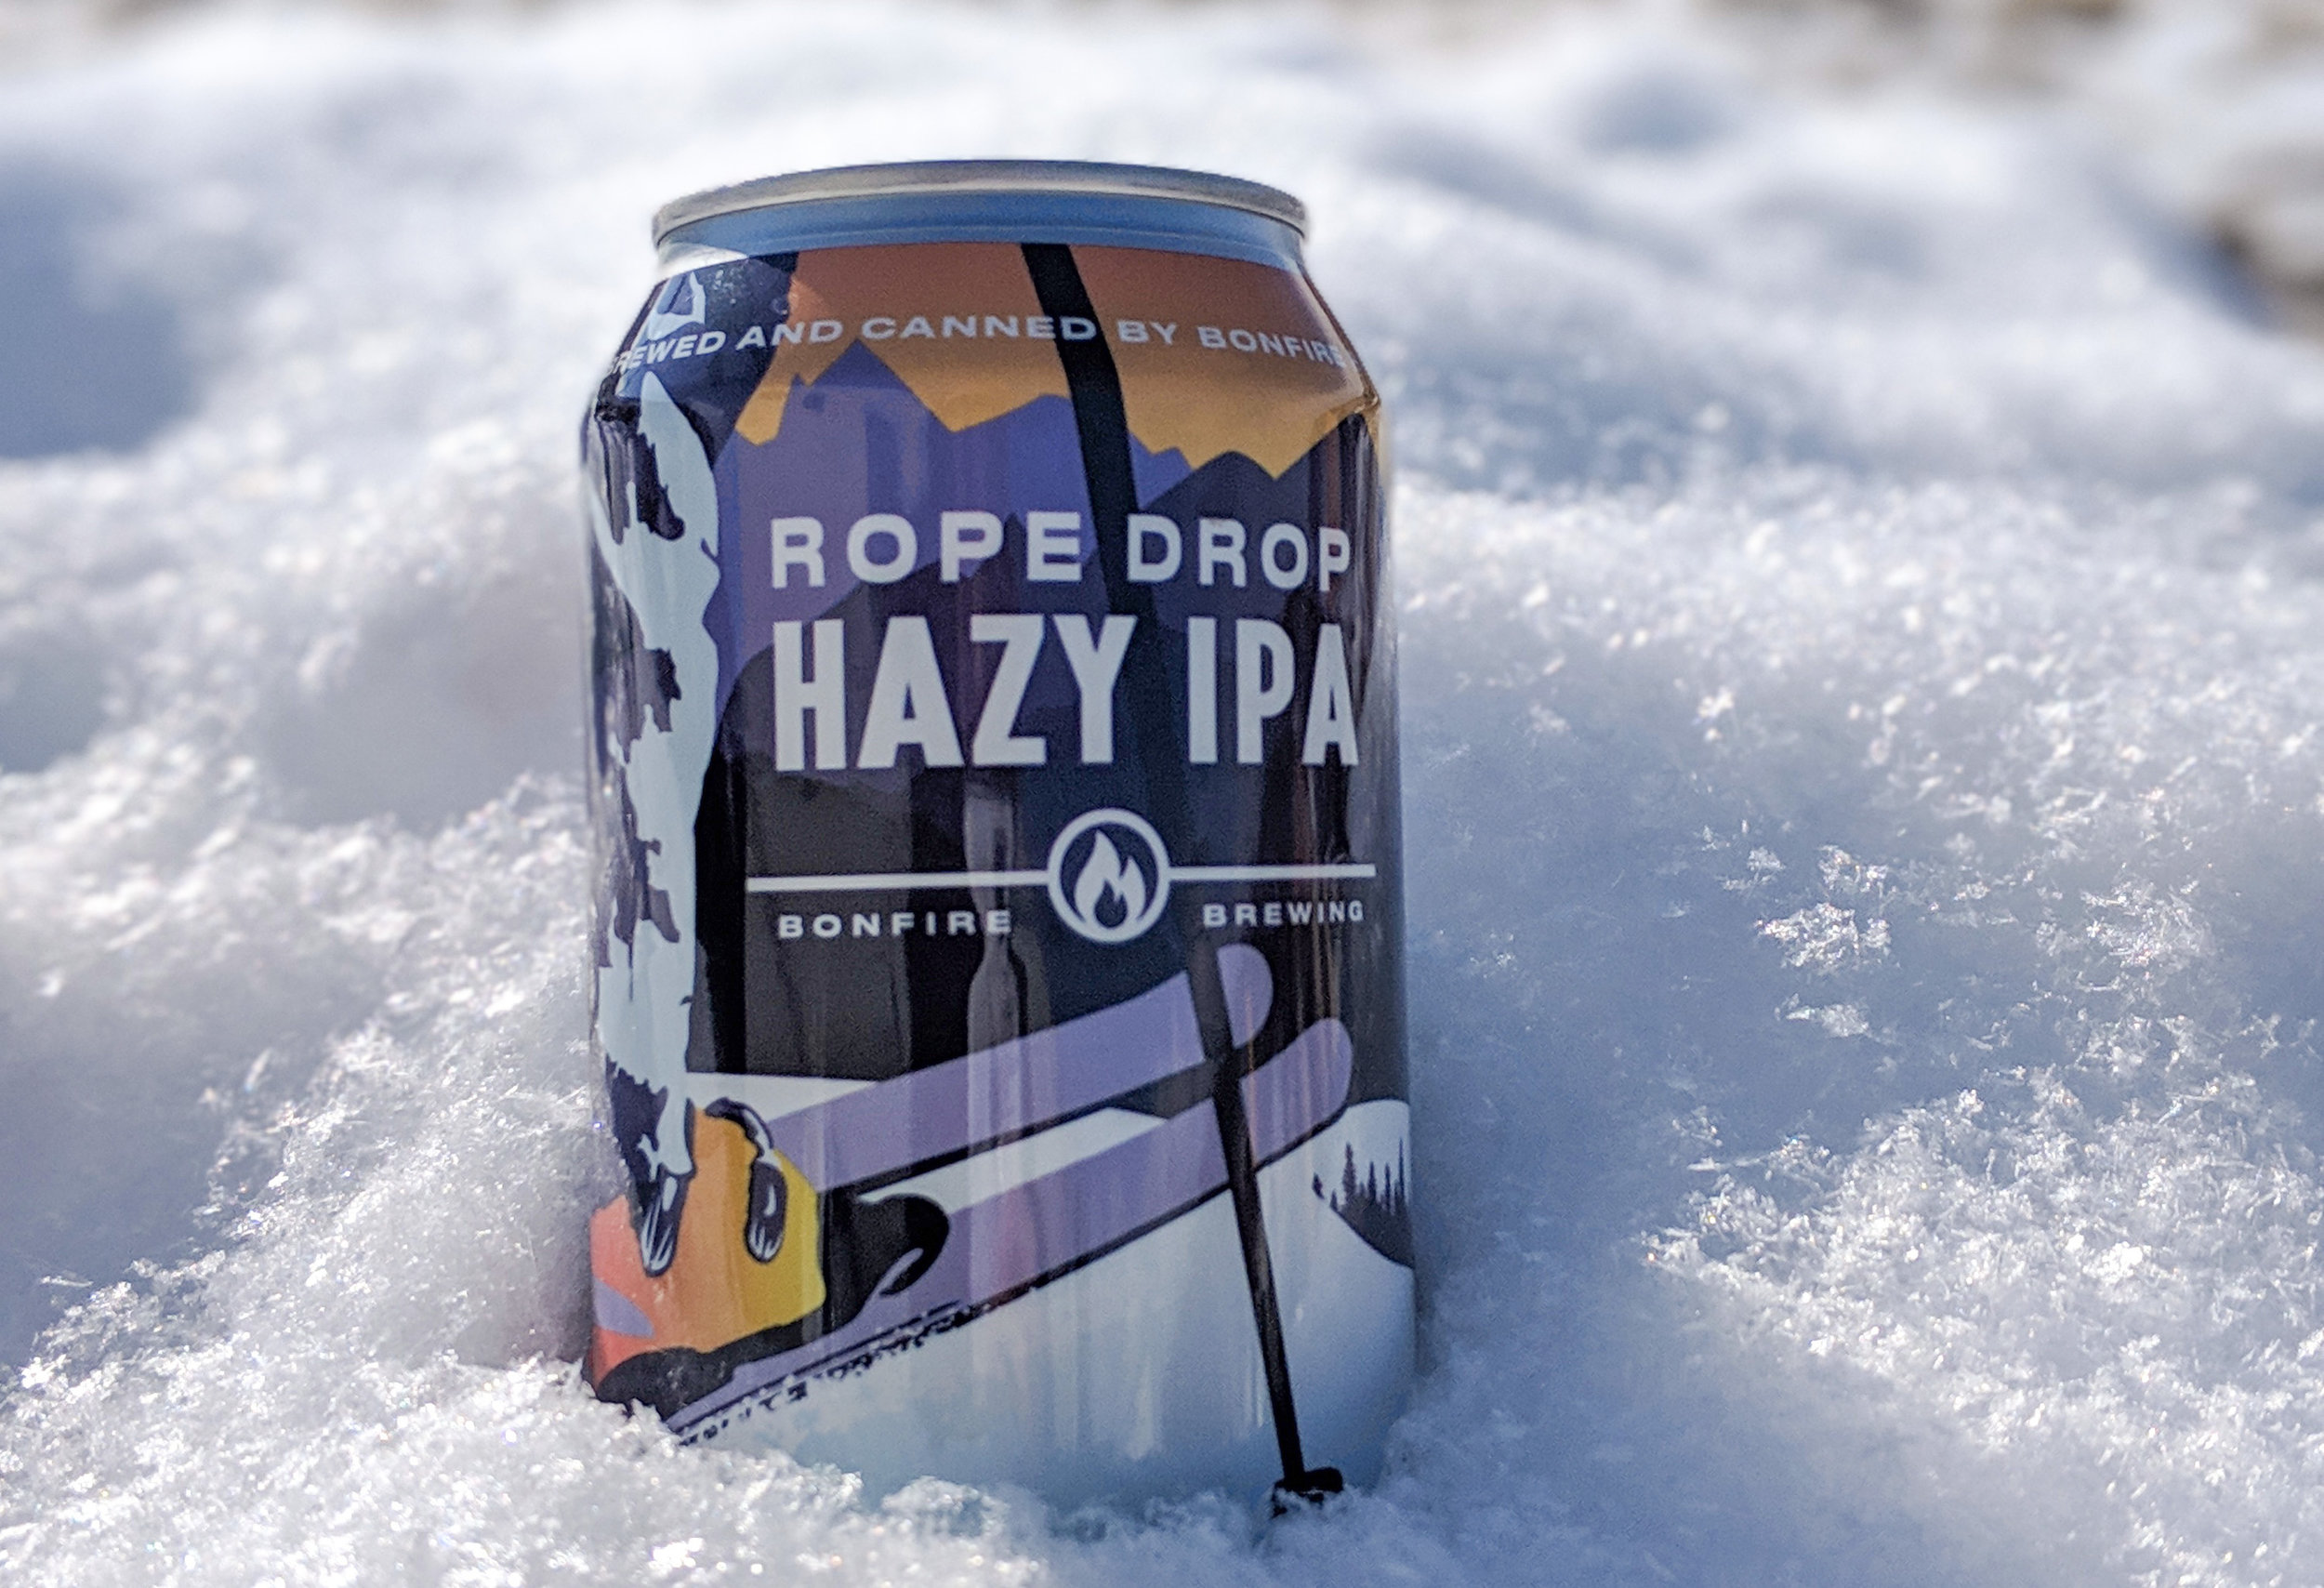 Rope-Drop-Hazy-IPA_snow2